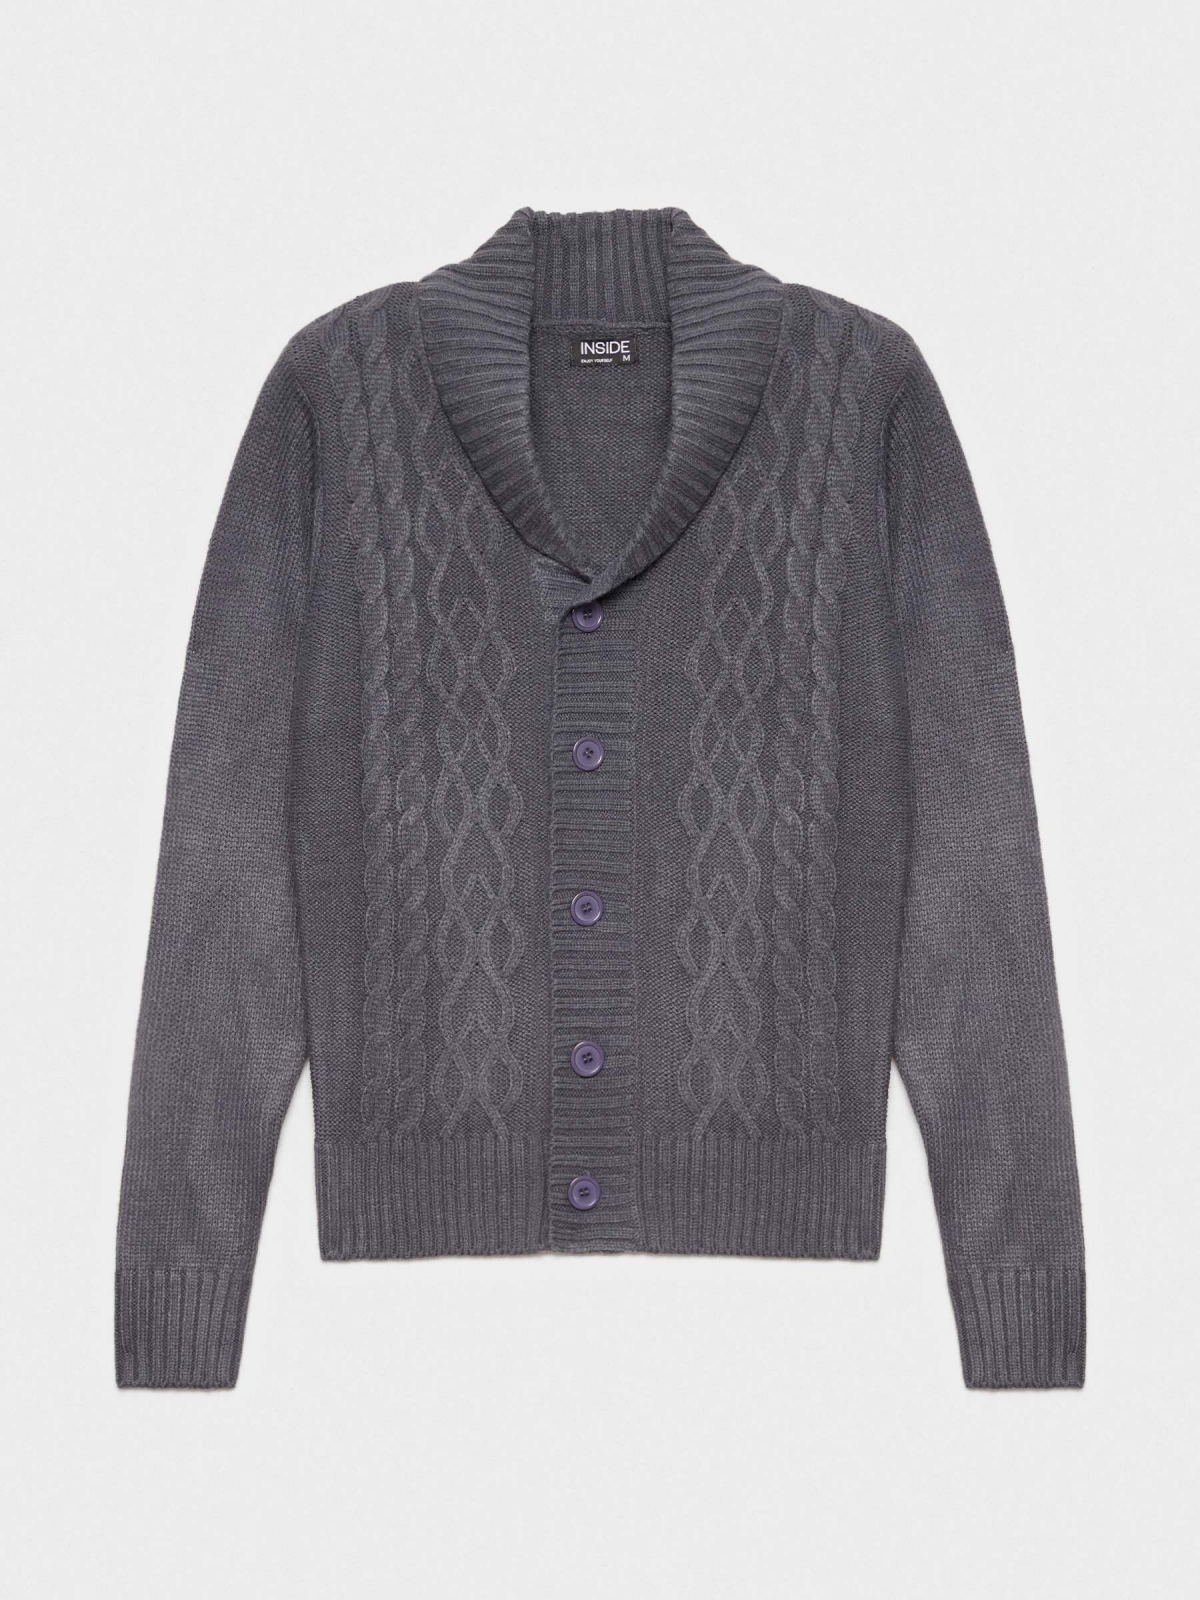  Knitted jacket stone grey